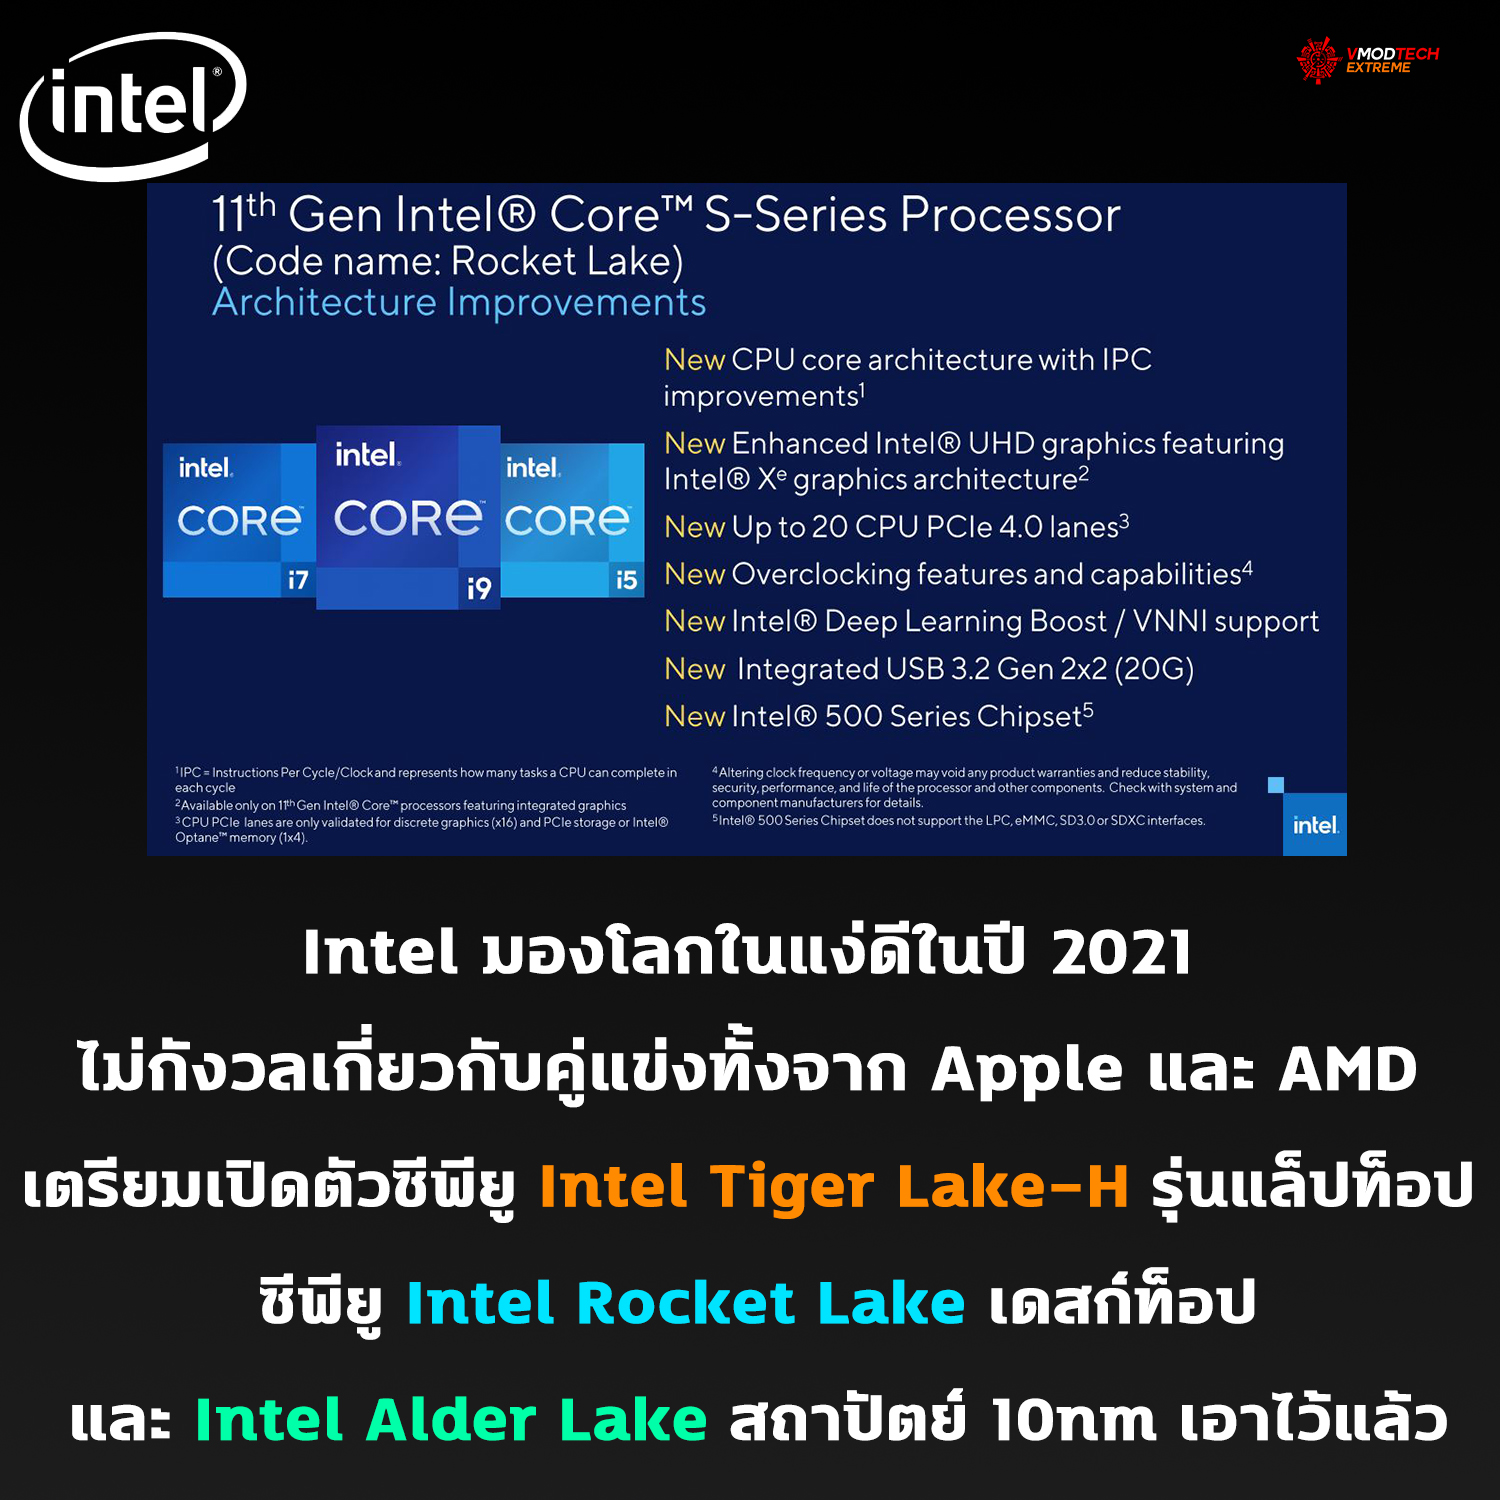 intel evp is optimistic about 2021 Intel มองโลกในแง่ดีในปี 2021 ไม่กังวลเกี่ยวกับคู่แข่งทั้งจาก Apple และ AMD เพราะเตรียมเปิดตัวซีพียู Intel Tiger Lake H / Rocket Lake และ Alder Lake เอาไว้แล้ว